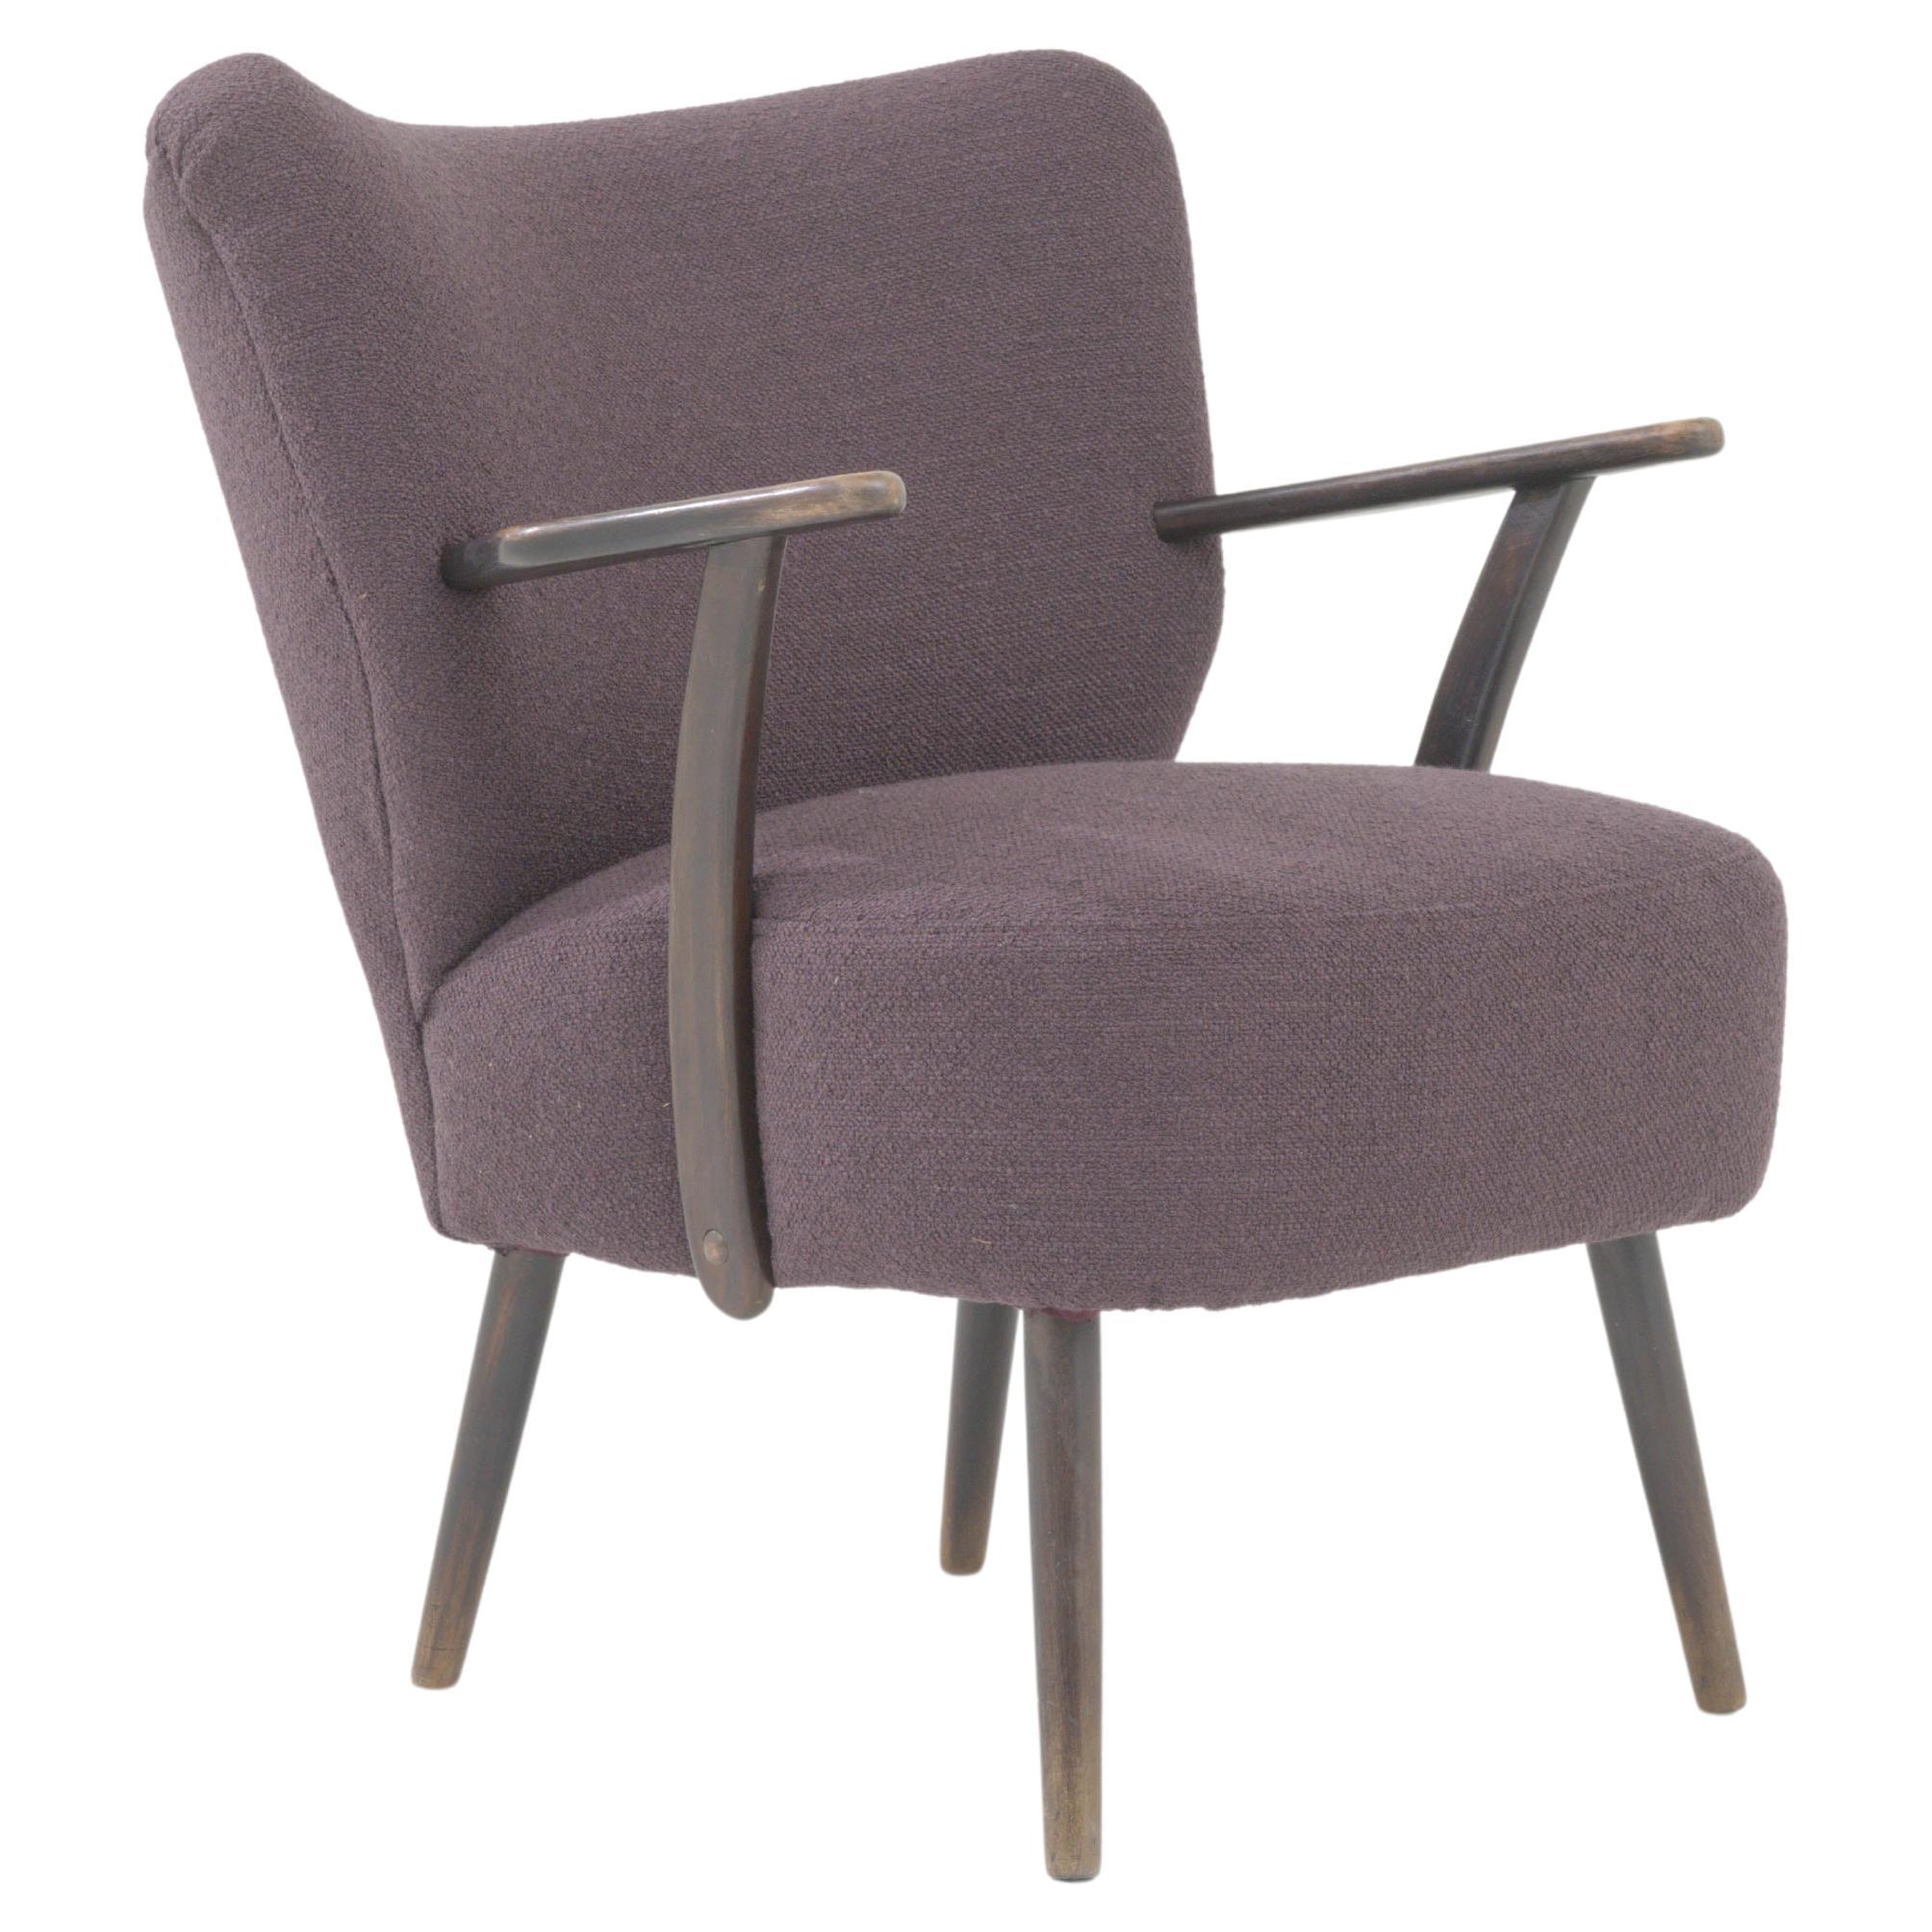 1960s Danish Upholstered Armchair For Sale